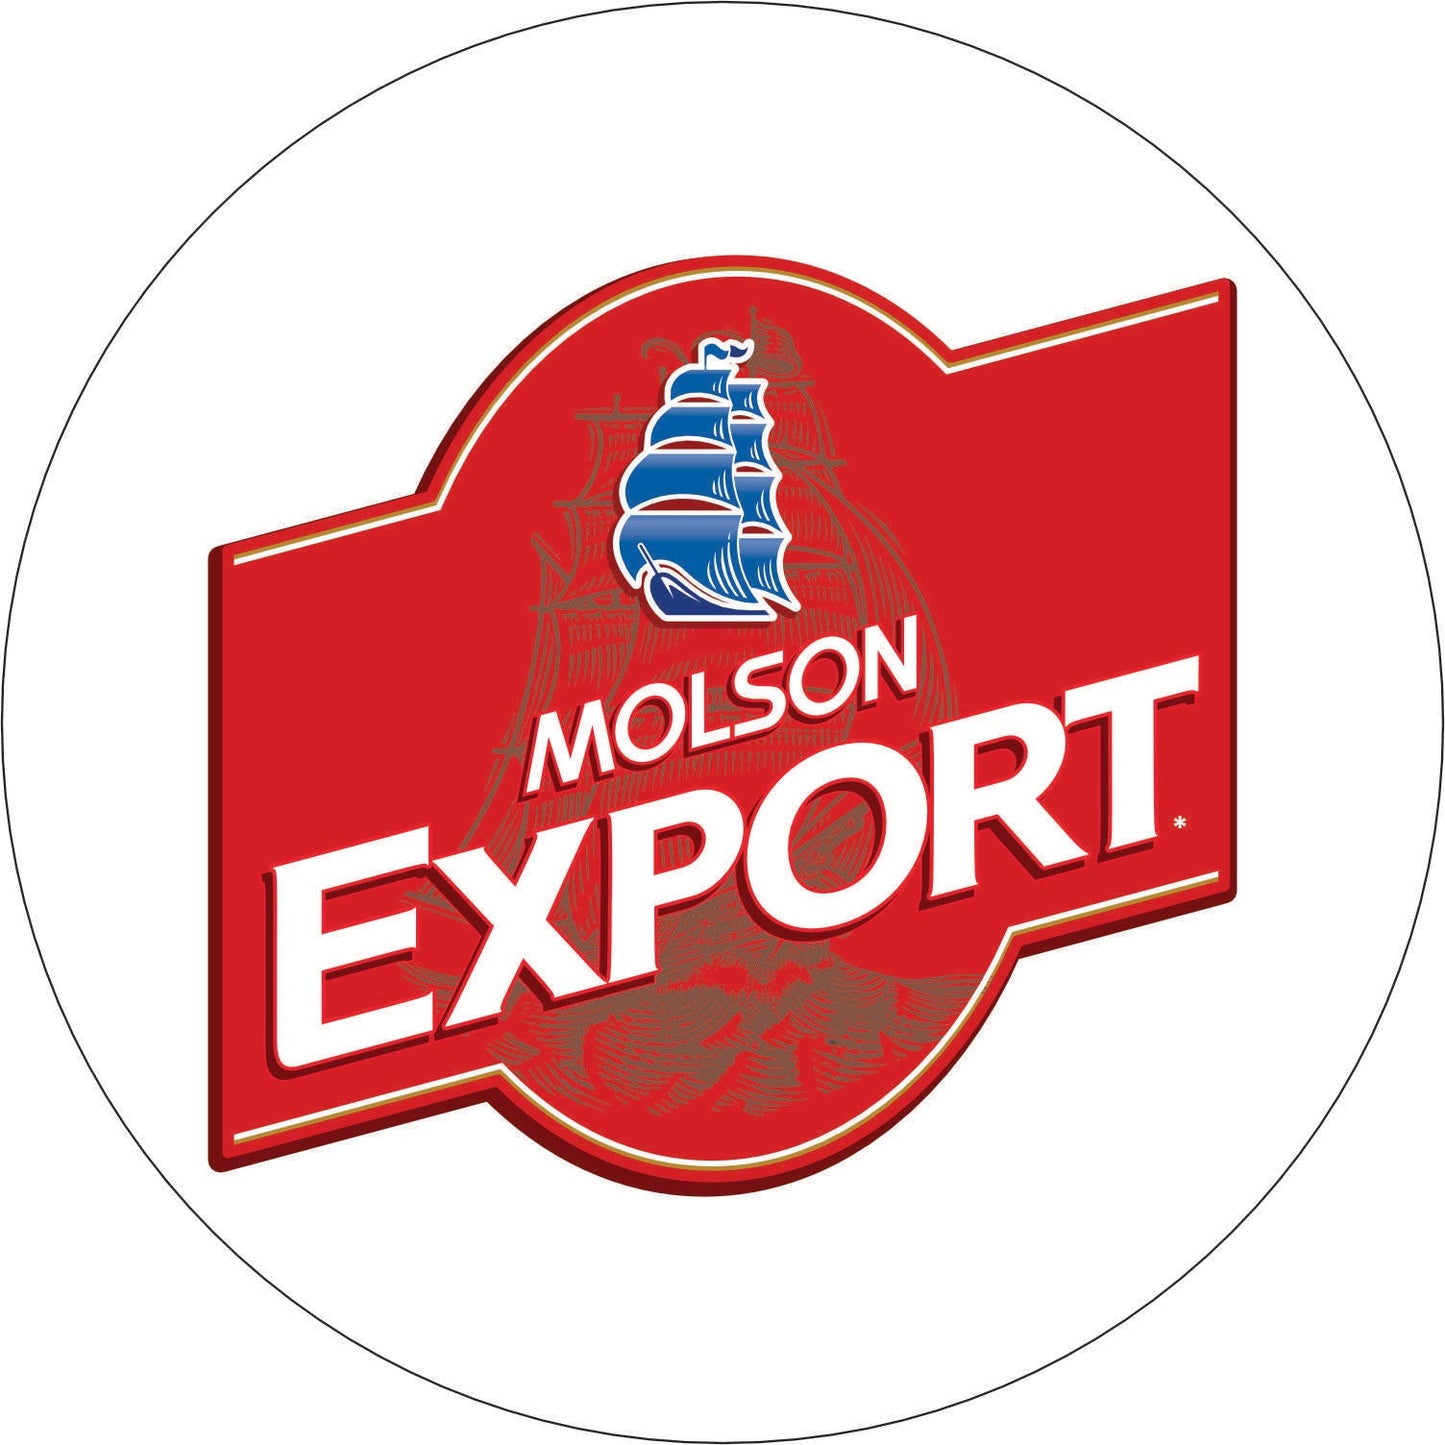 100-Single-sided illuminated sign - Bière Molson Export